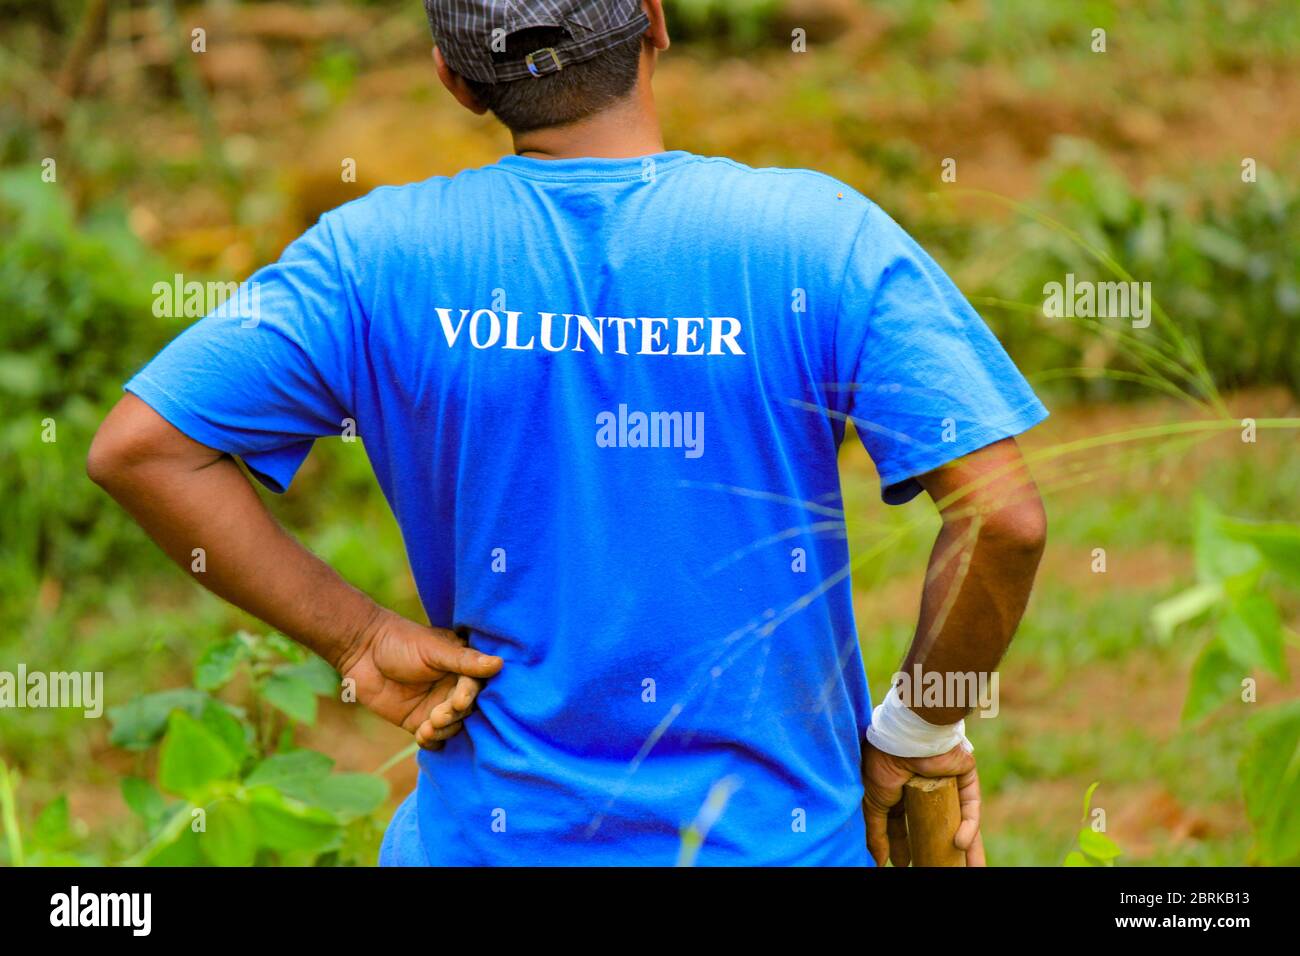 volunteer on volunteering activity Stock Photo